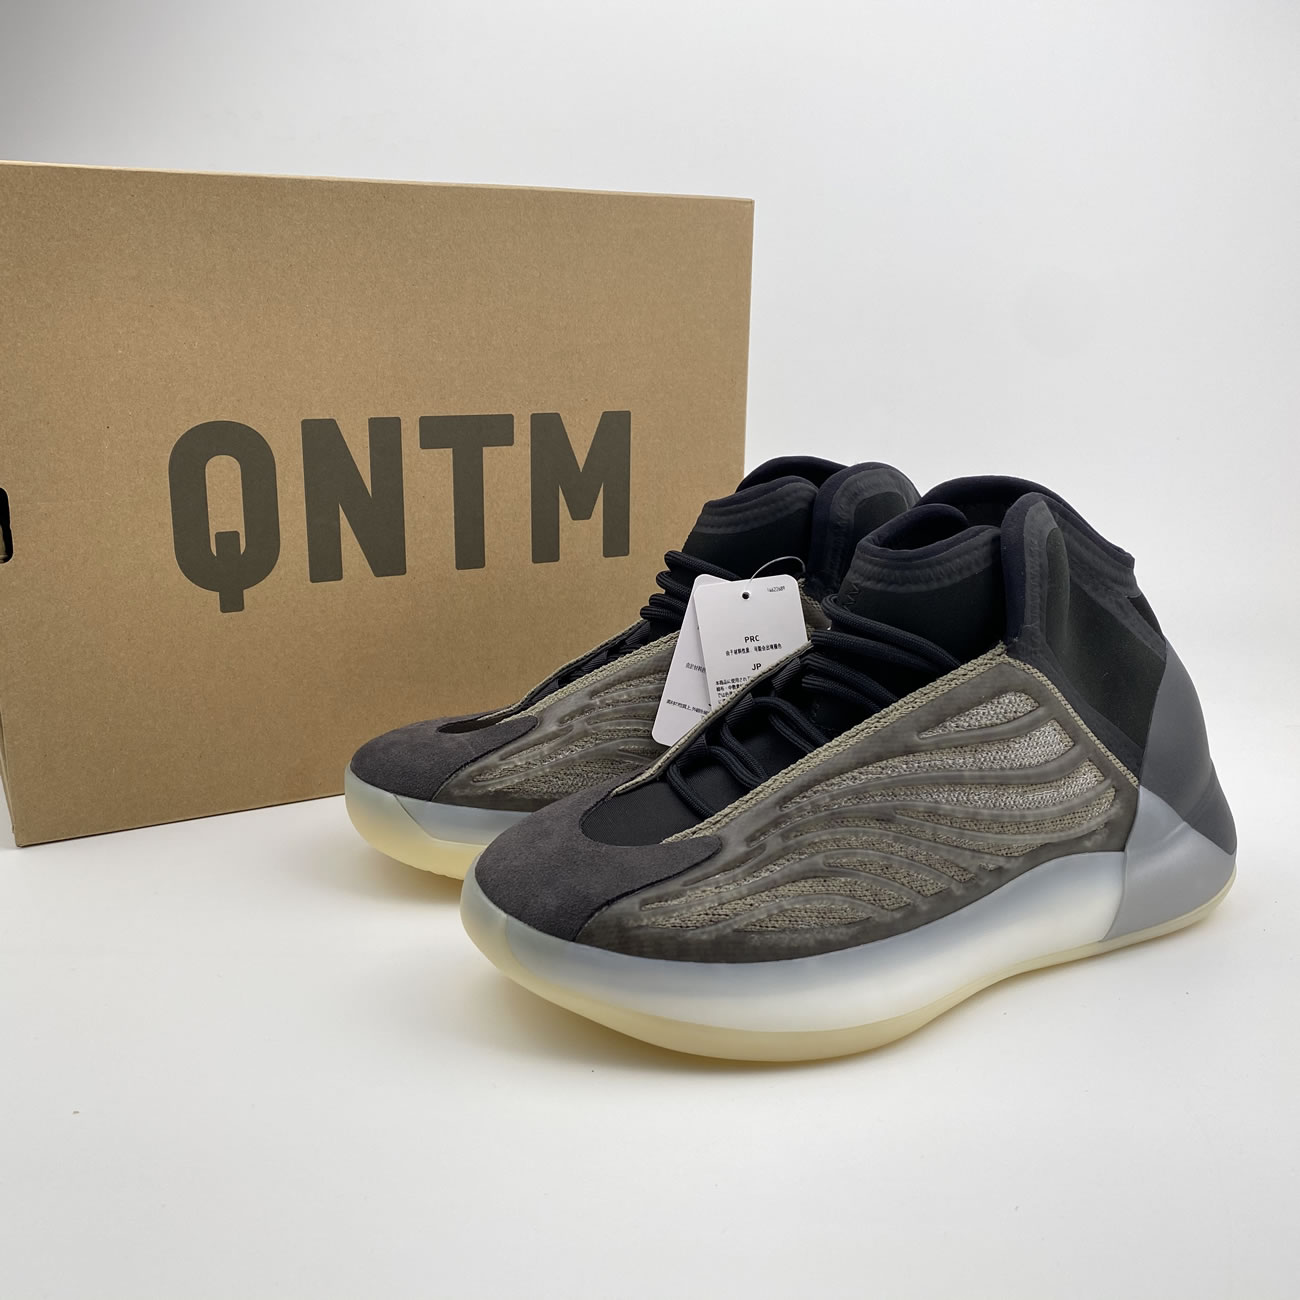 Adidas Yeezy Quantum Qntm Basketball Barium H68771 Release Date (12) - newkick.org